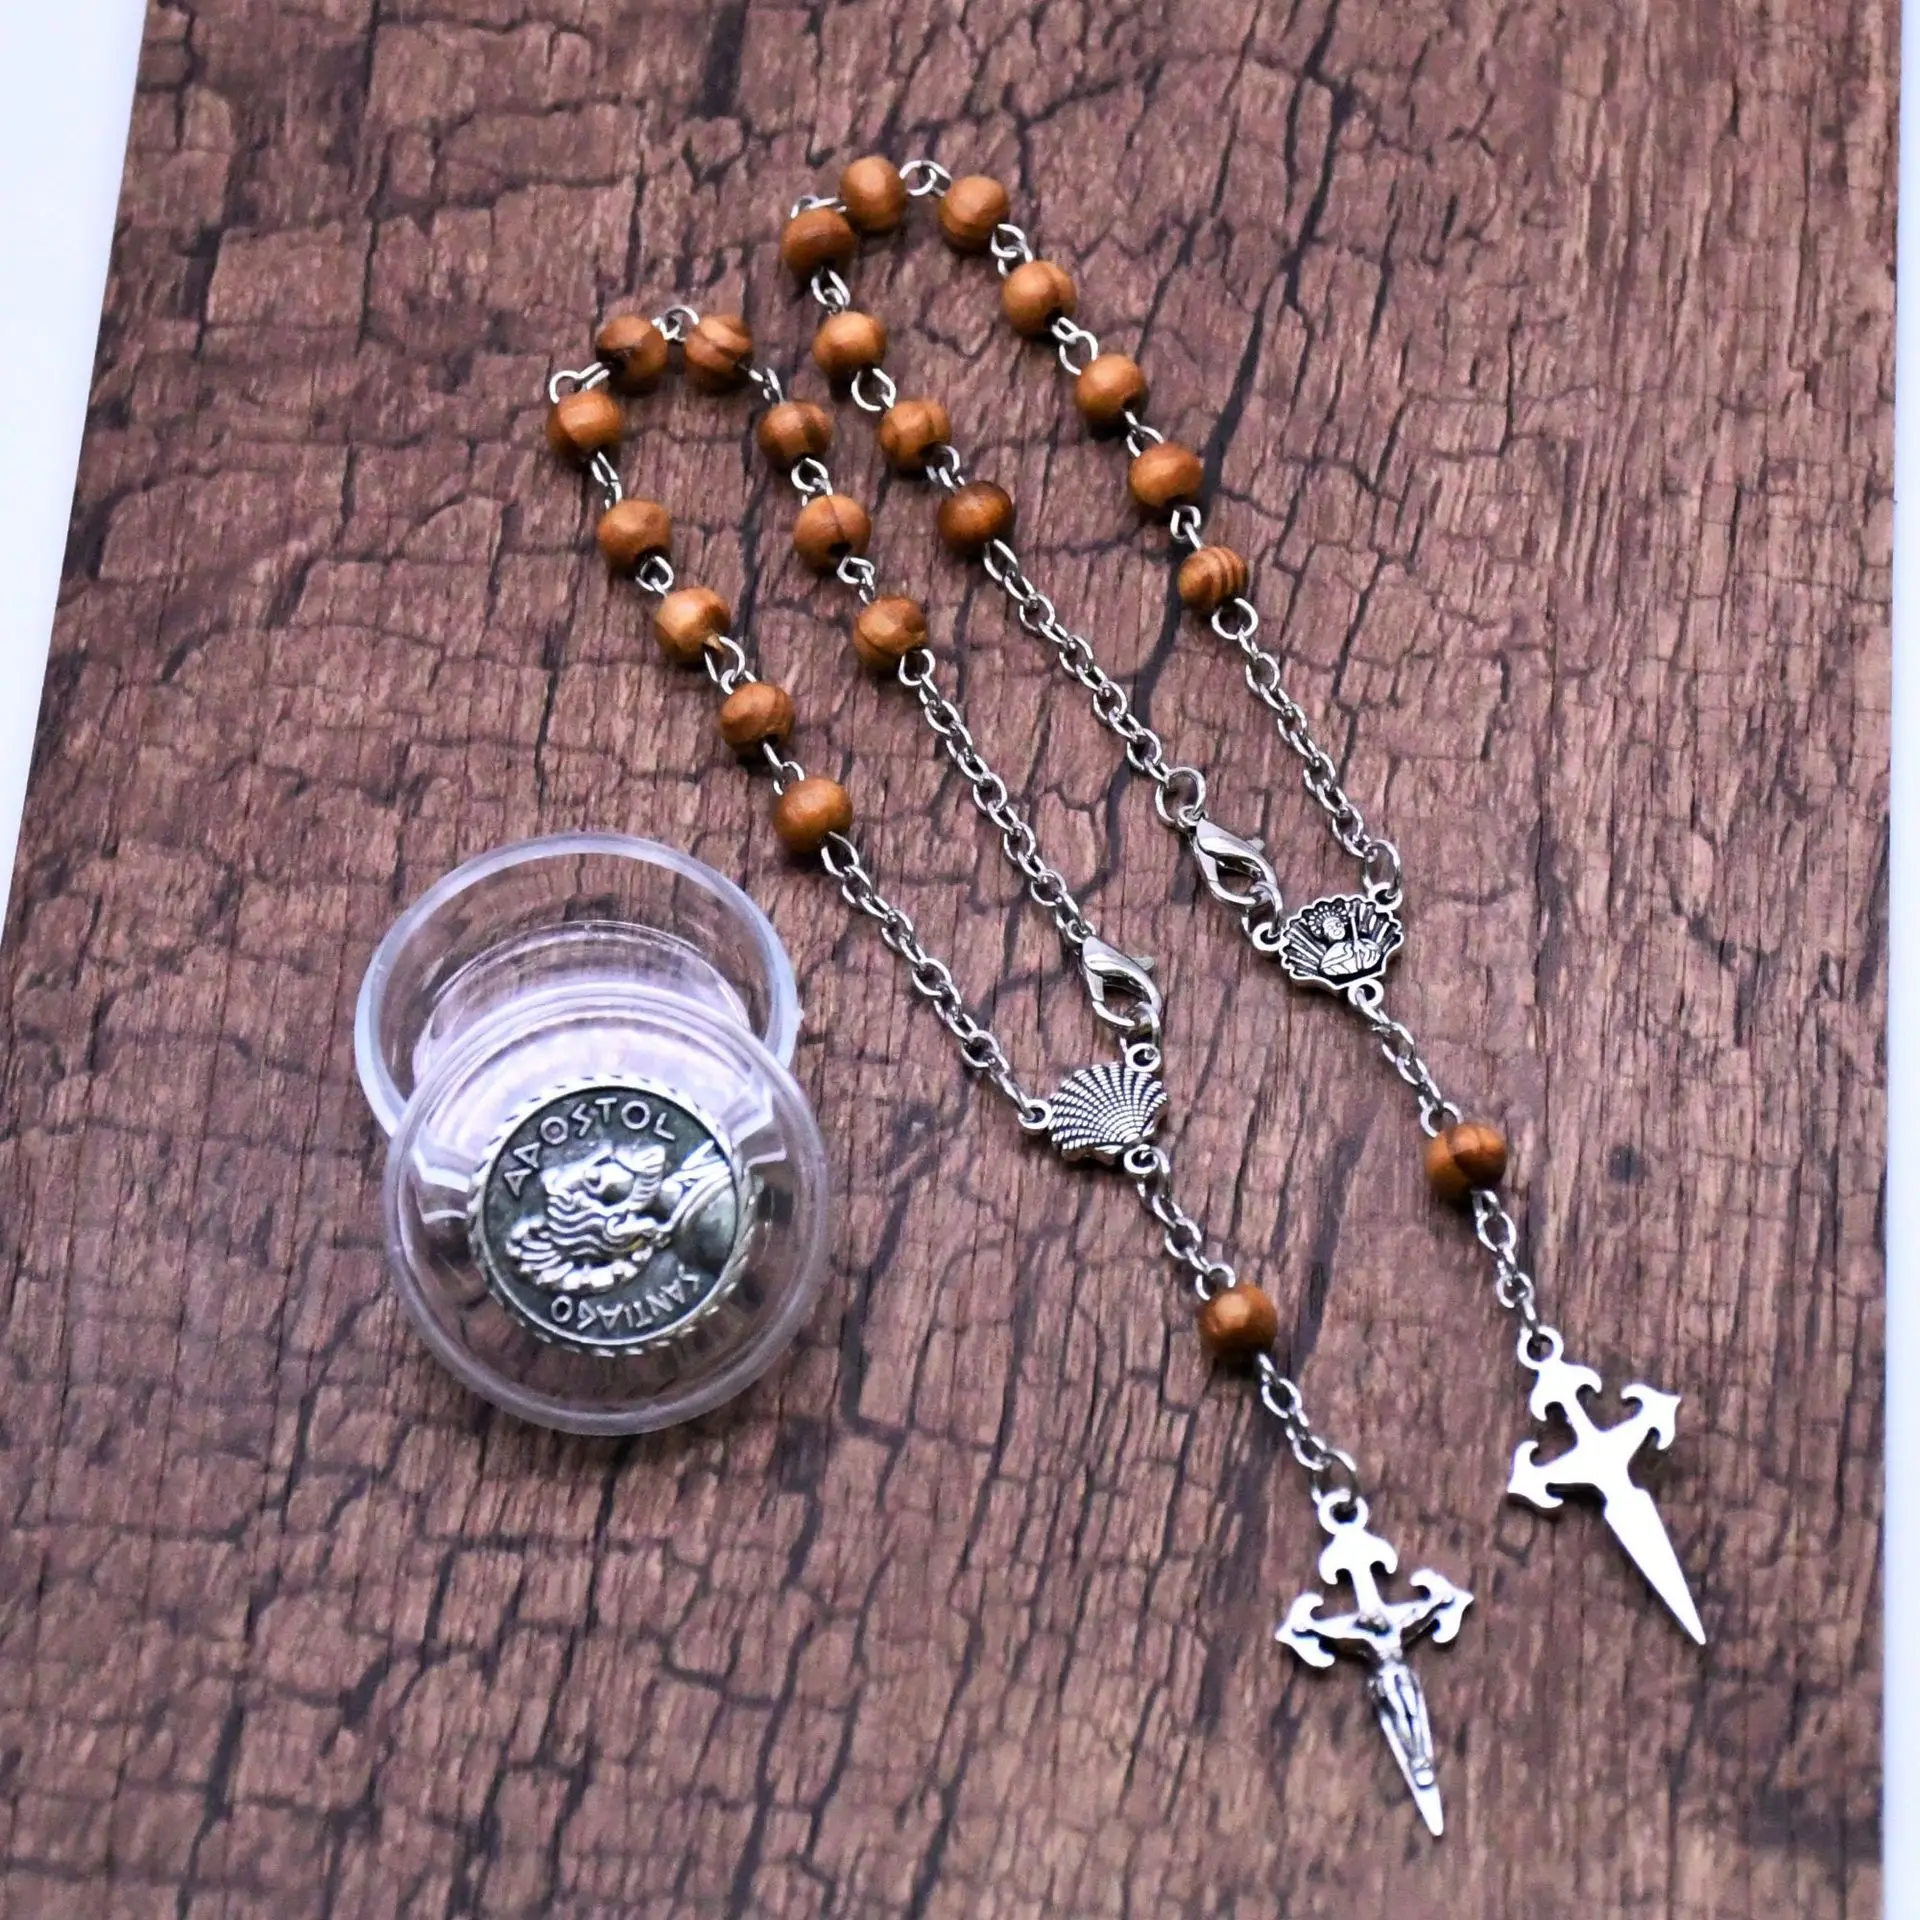 6mm Wooden Beads Chain Rosary Bracelet Christian Catholic Jesus Cross Bracelets for Women Religious Church Prayer Jewelry - купить | Цепочки и браслеты -1005002709729674